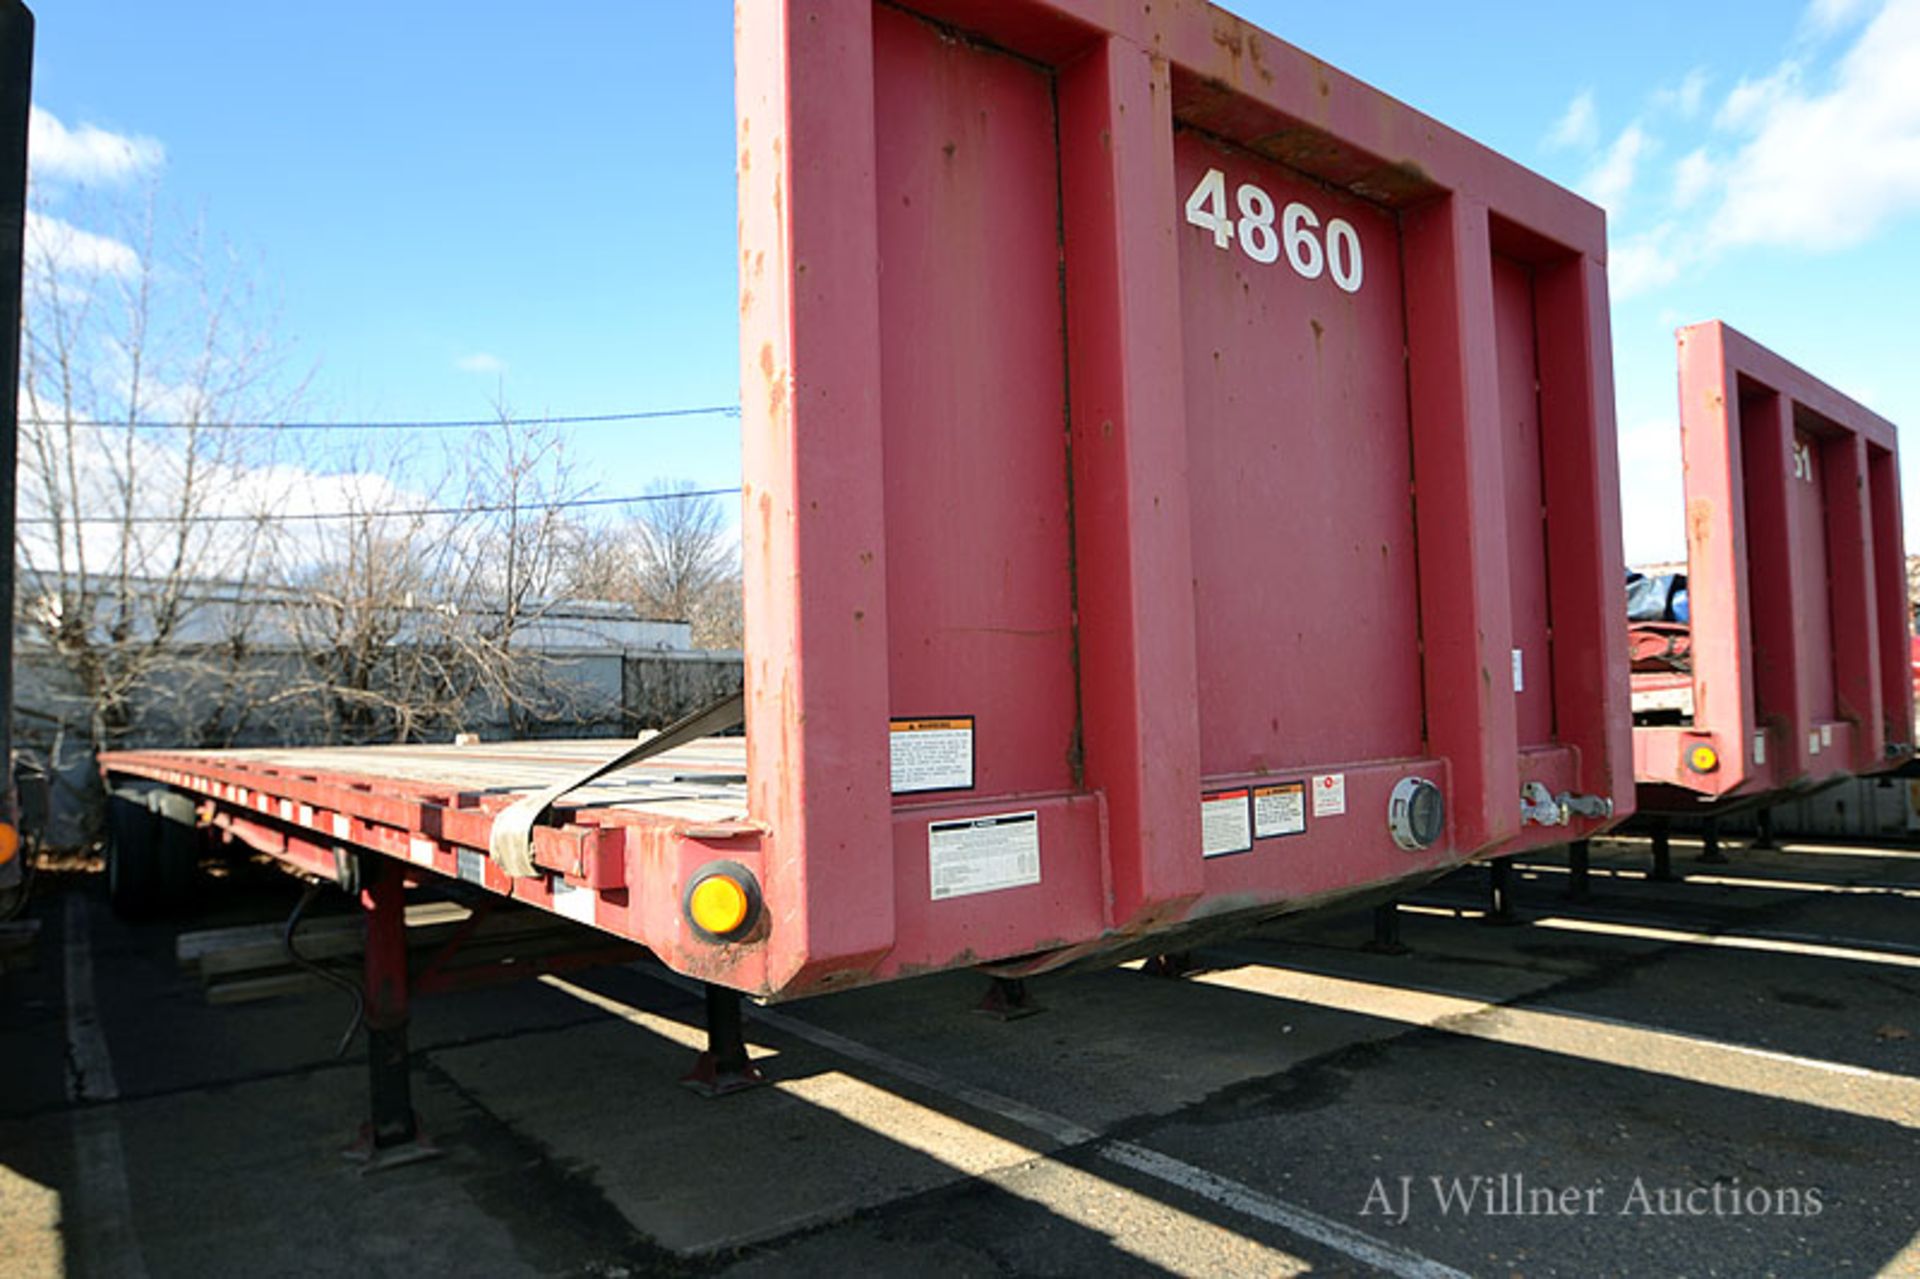 2006 Great Dane 48’-0 tandem axle flatbed trailer VIN 1GRDM96226M701780 (Unit #4860) Aluminum